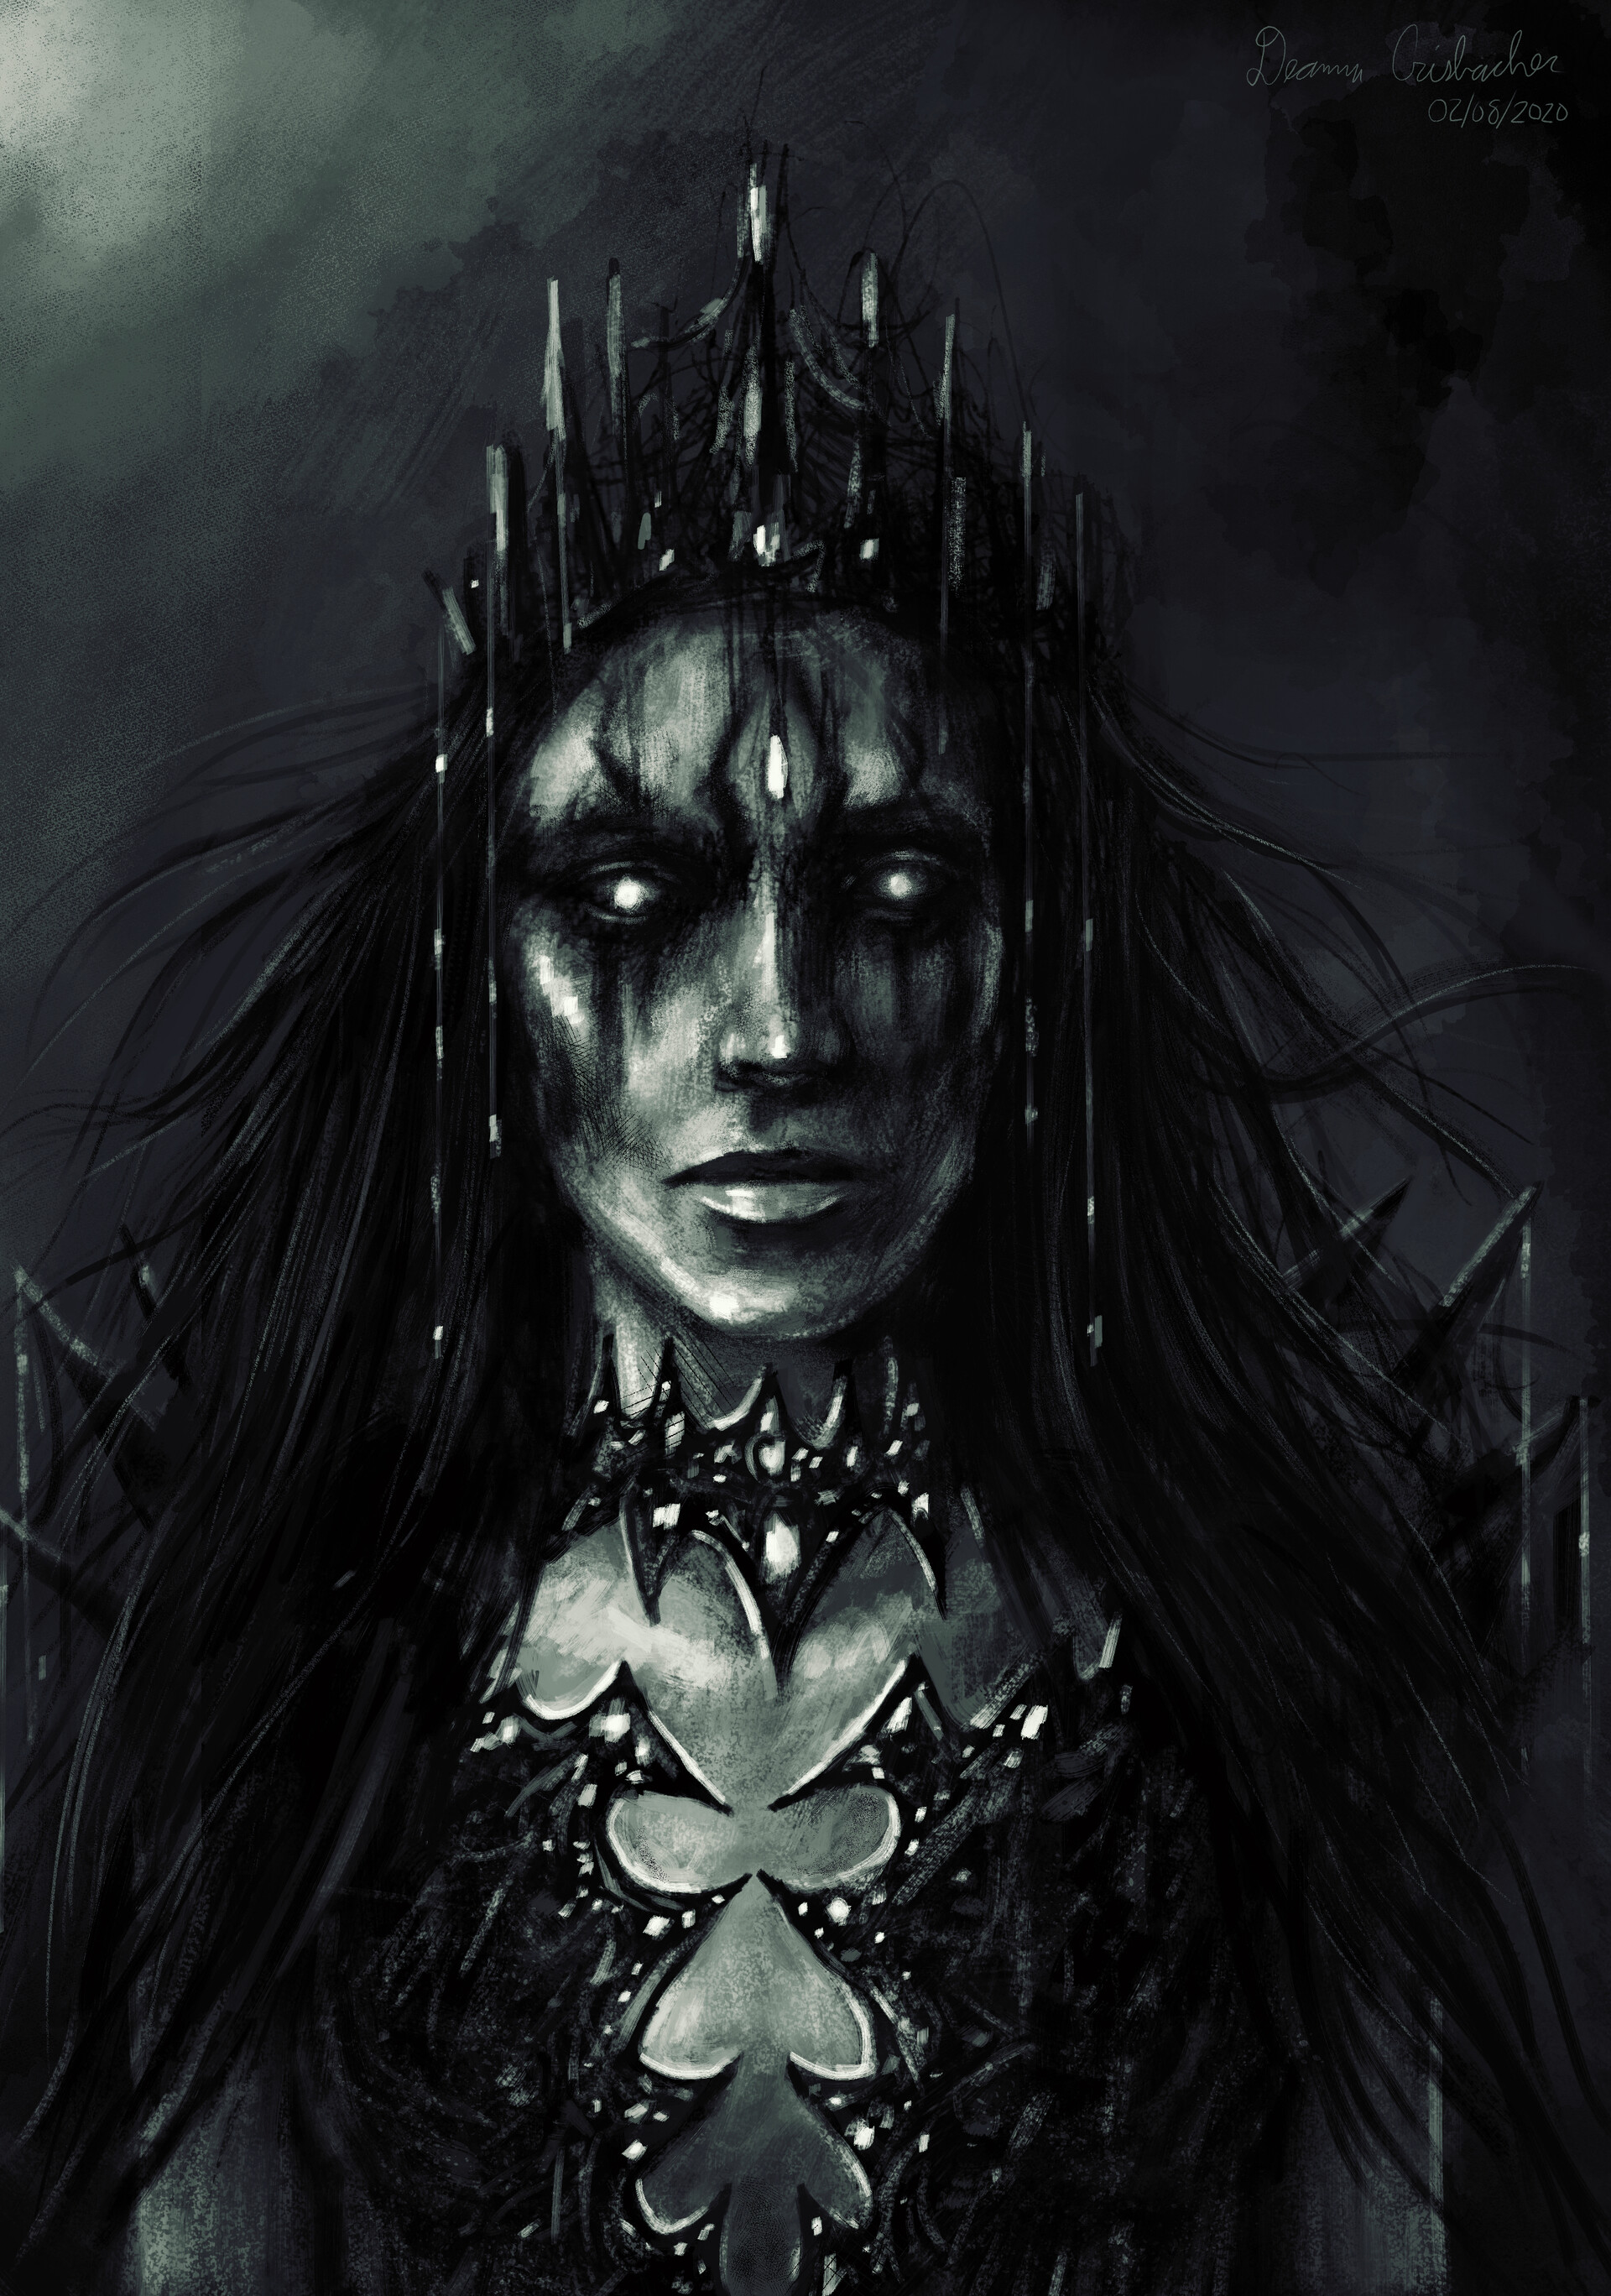 ArtStation - Underworld Queen, Deanna Crisbacher